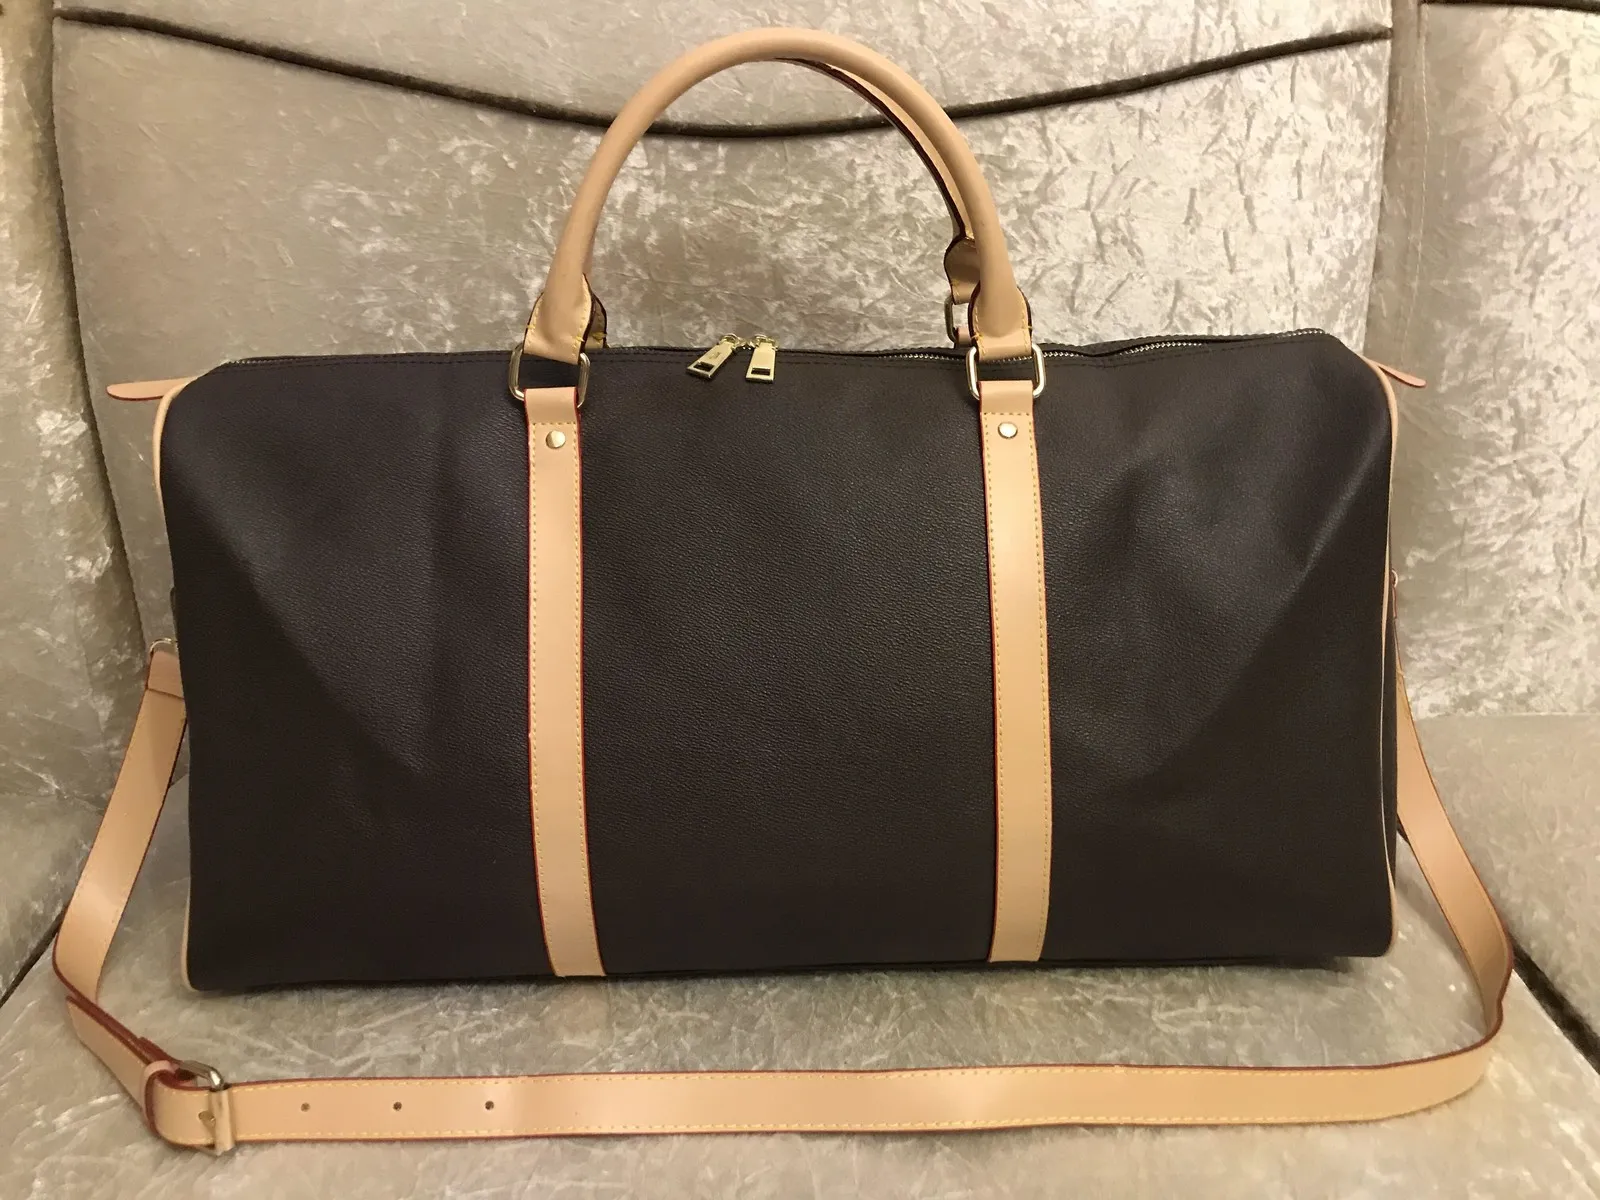 2019 men duffle bag women travel bags hand luggage luxury designer travel bag men pu leather handbags large cross body bag totes 55cm